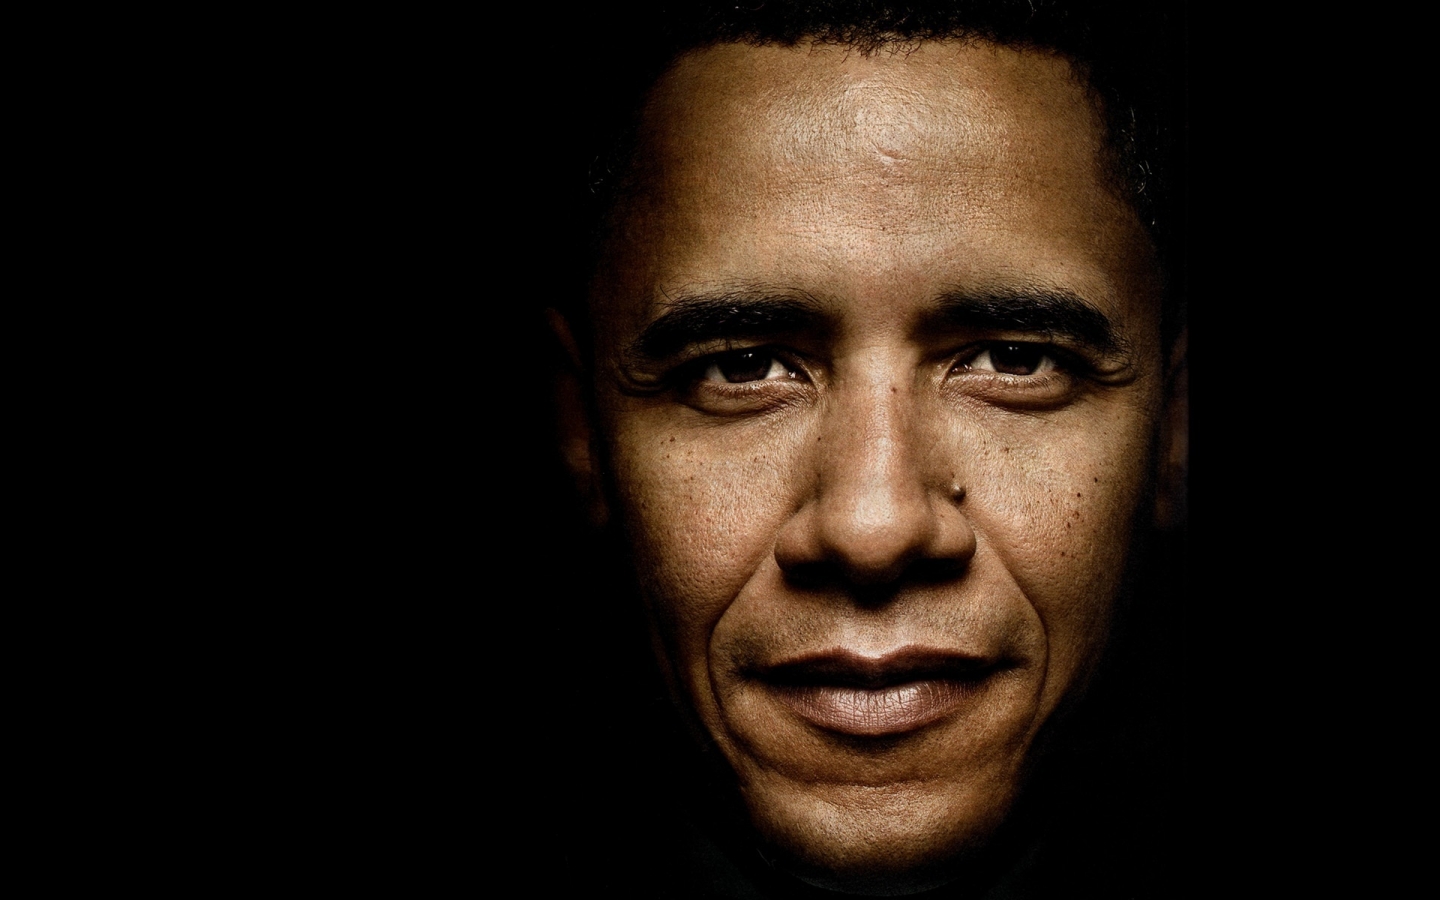 Barack Obama Close Up for 1440 x 900 widescreen resolution